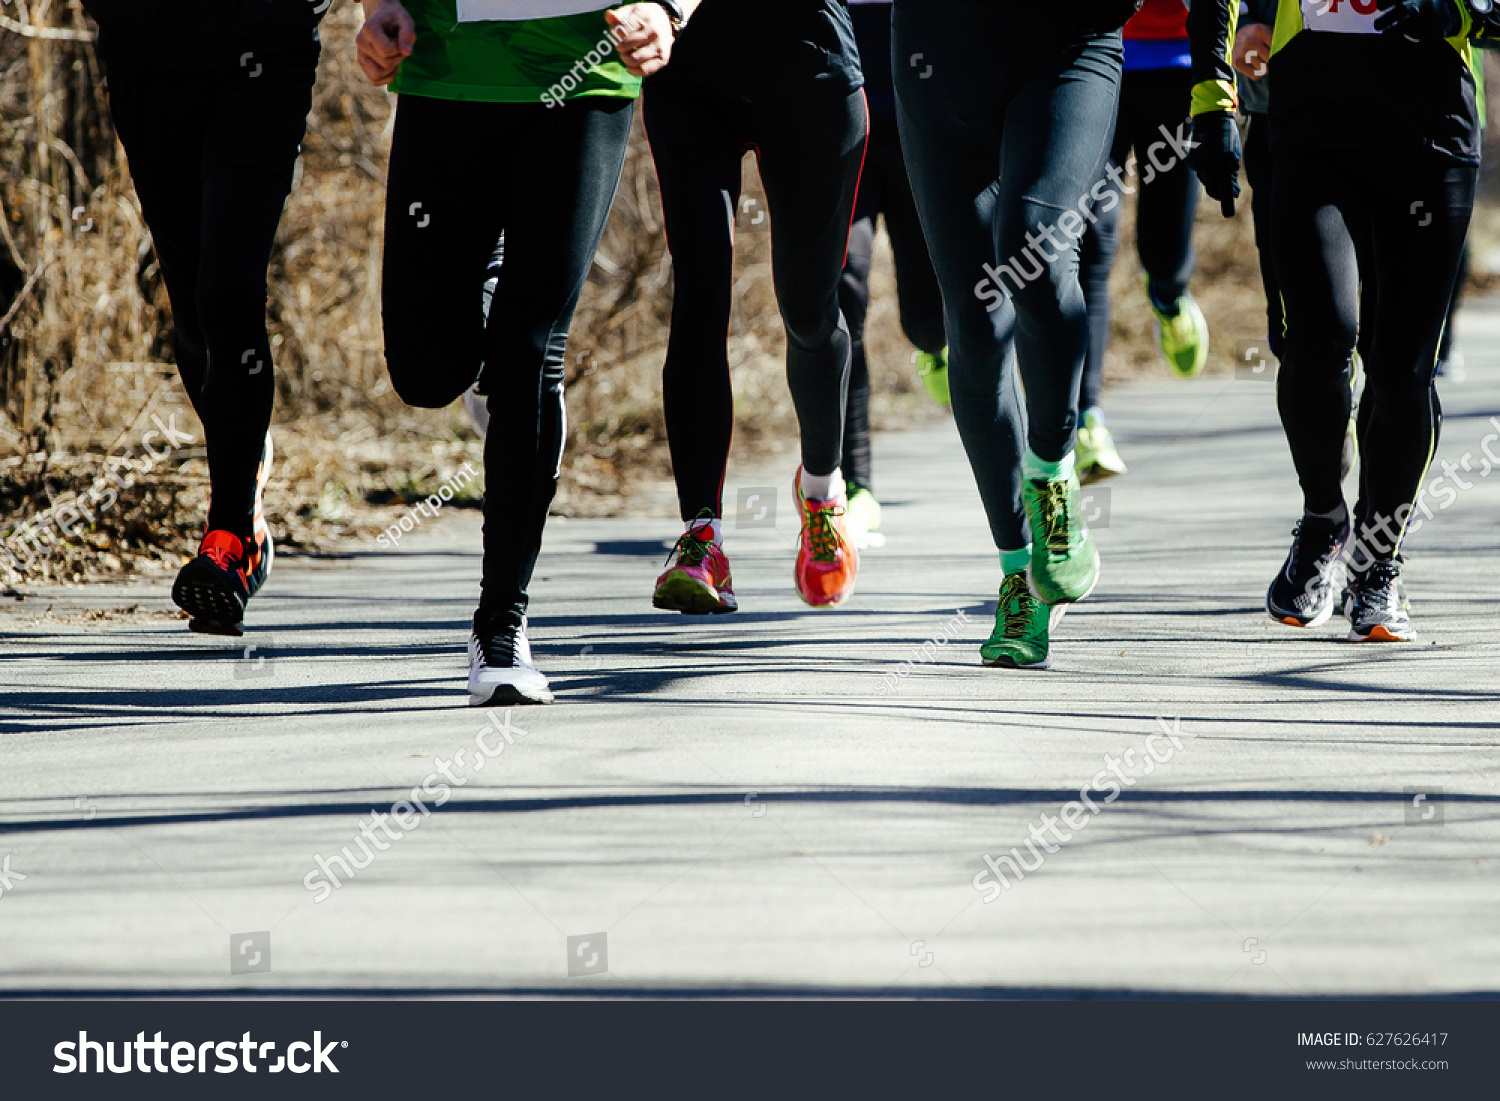 feet runners group leaders runnnig on asphalt road in a city park #627626417